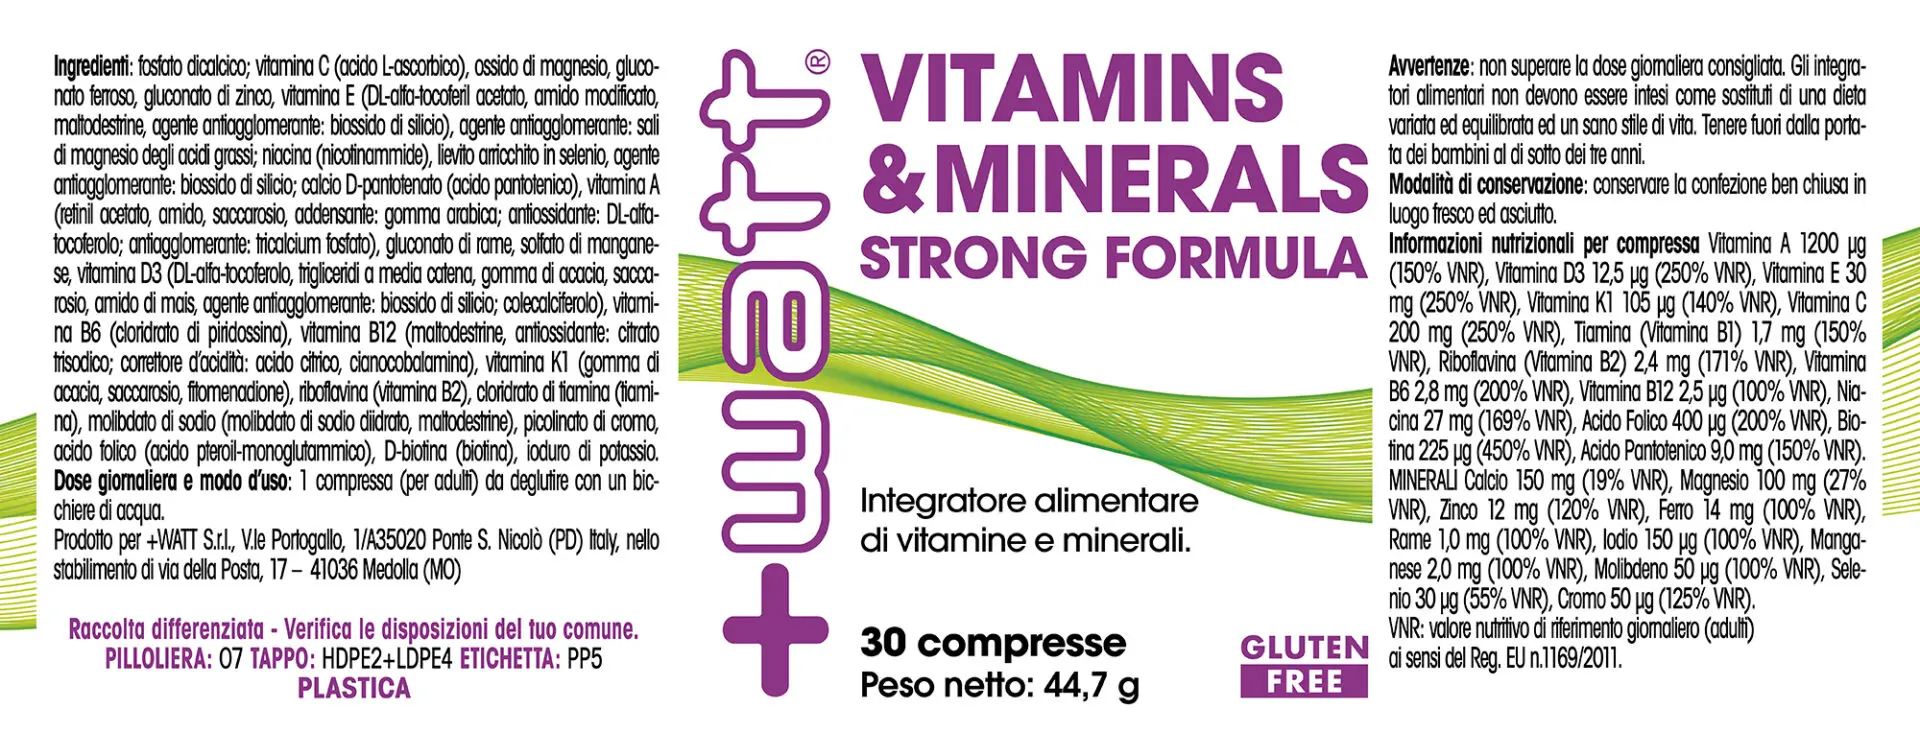 Vitamins&Minerals Strong Formula